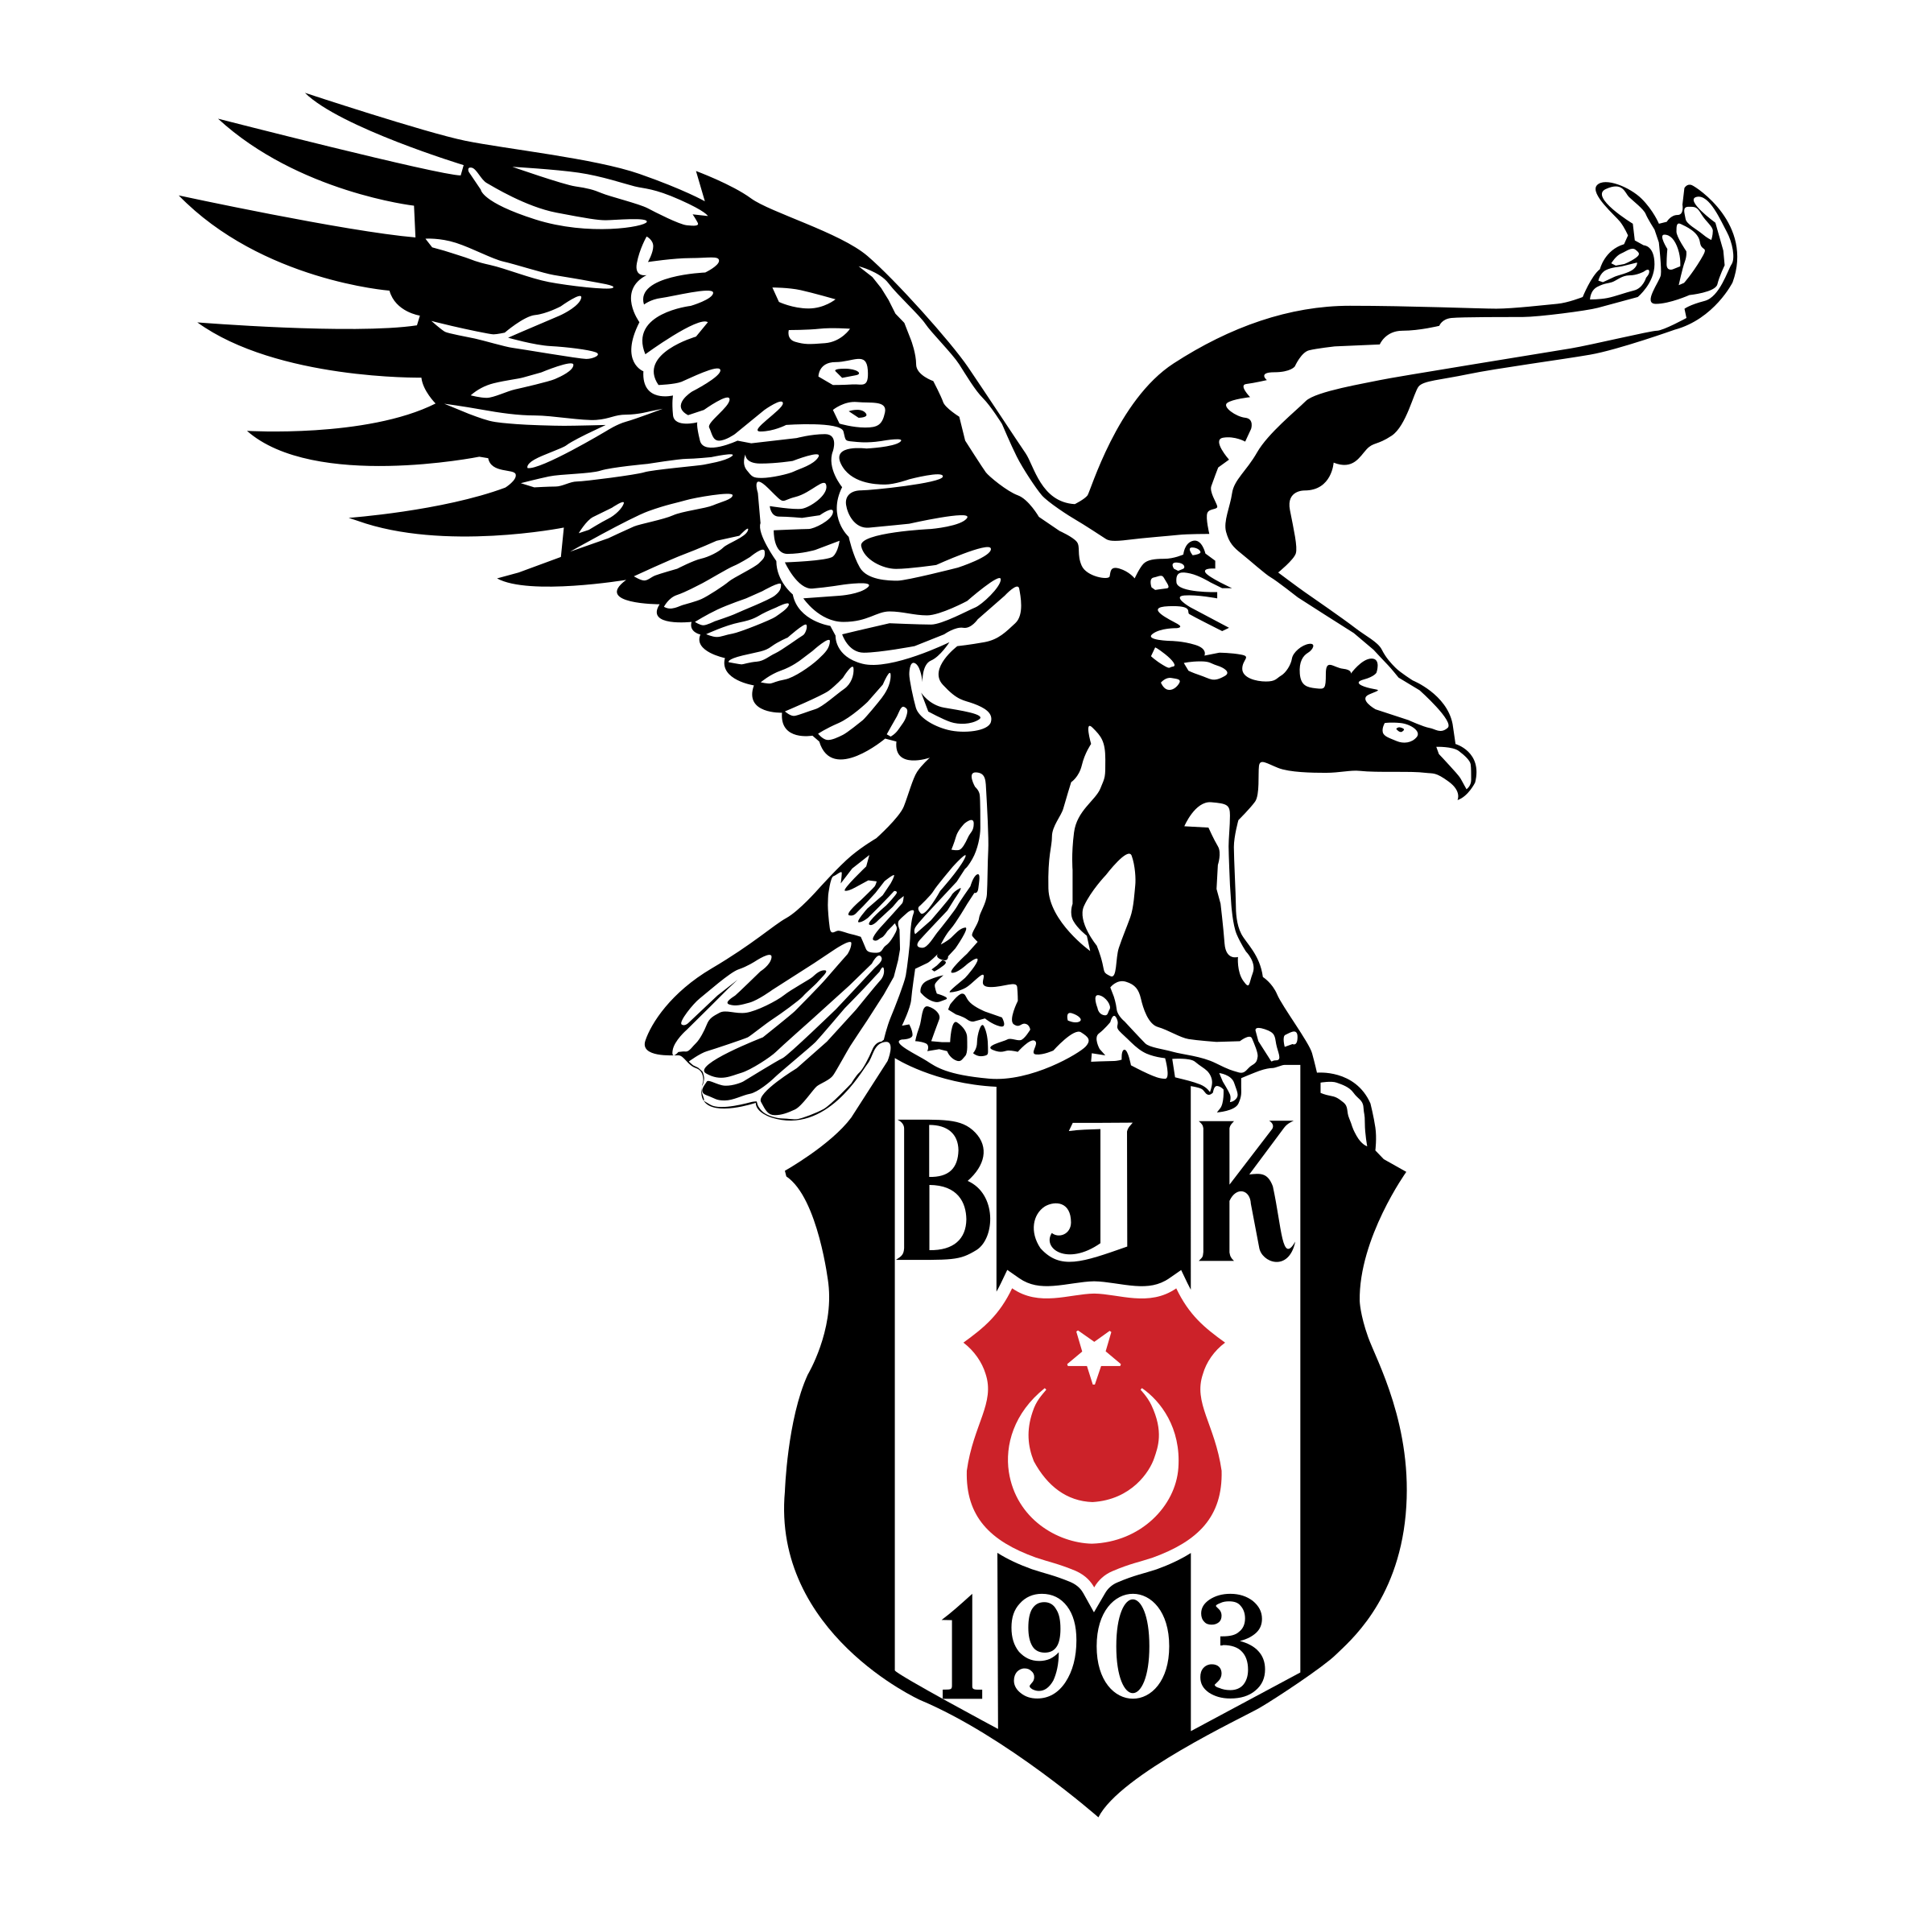 bjk 1903 logo png transparent #40871